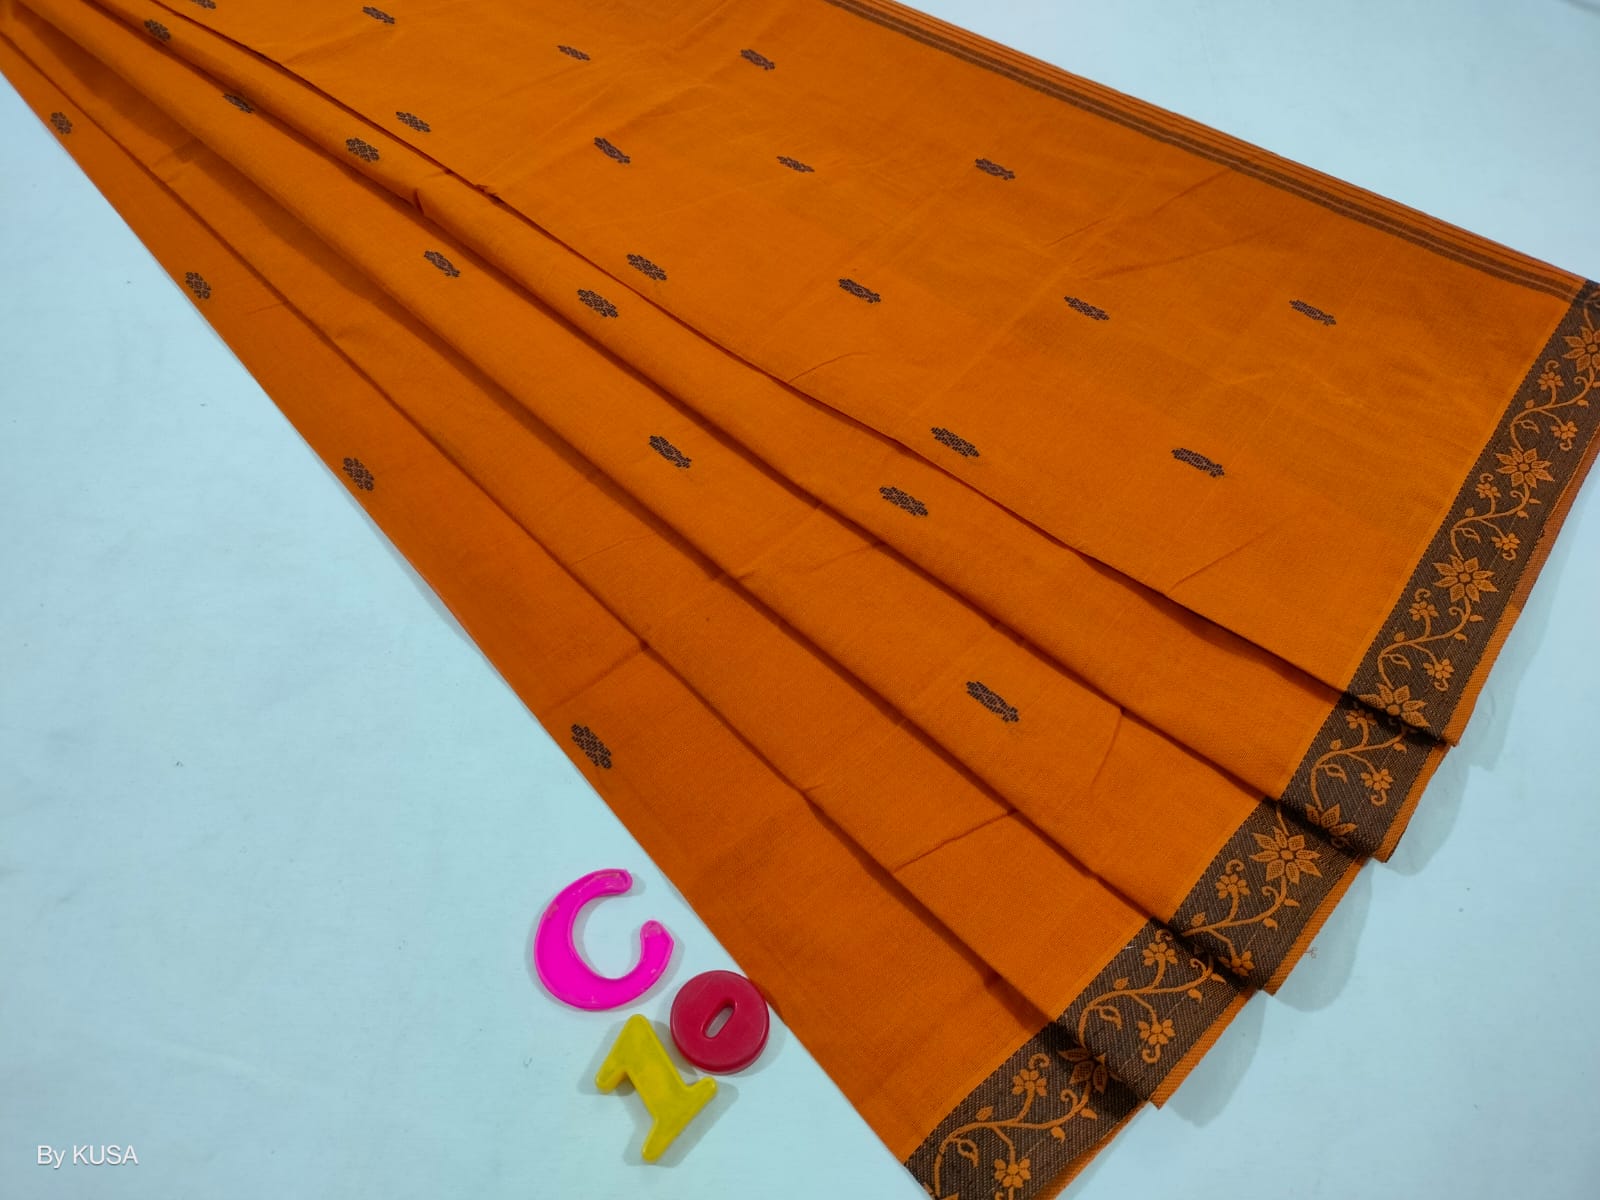 Covai handloom pure soft cotton saree